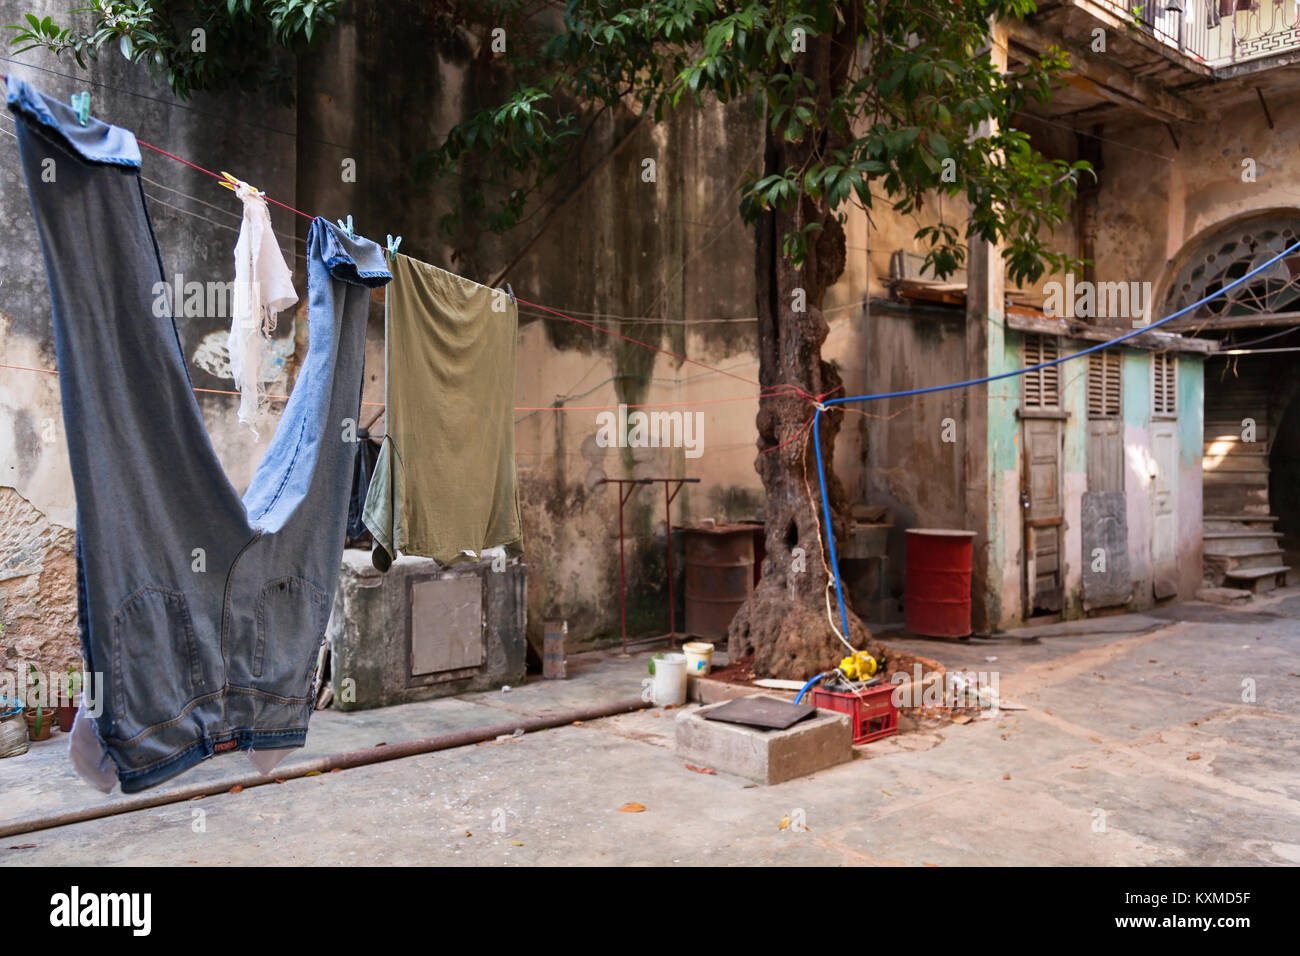 Vestiti appesi per asciugare in Avana, Cuba. Foto Stock